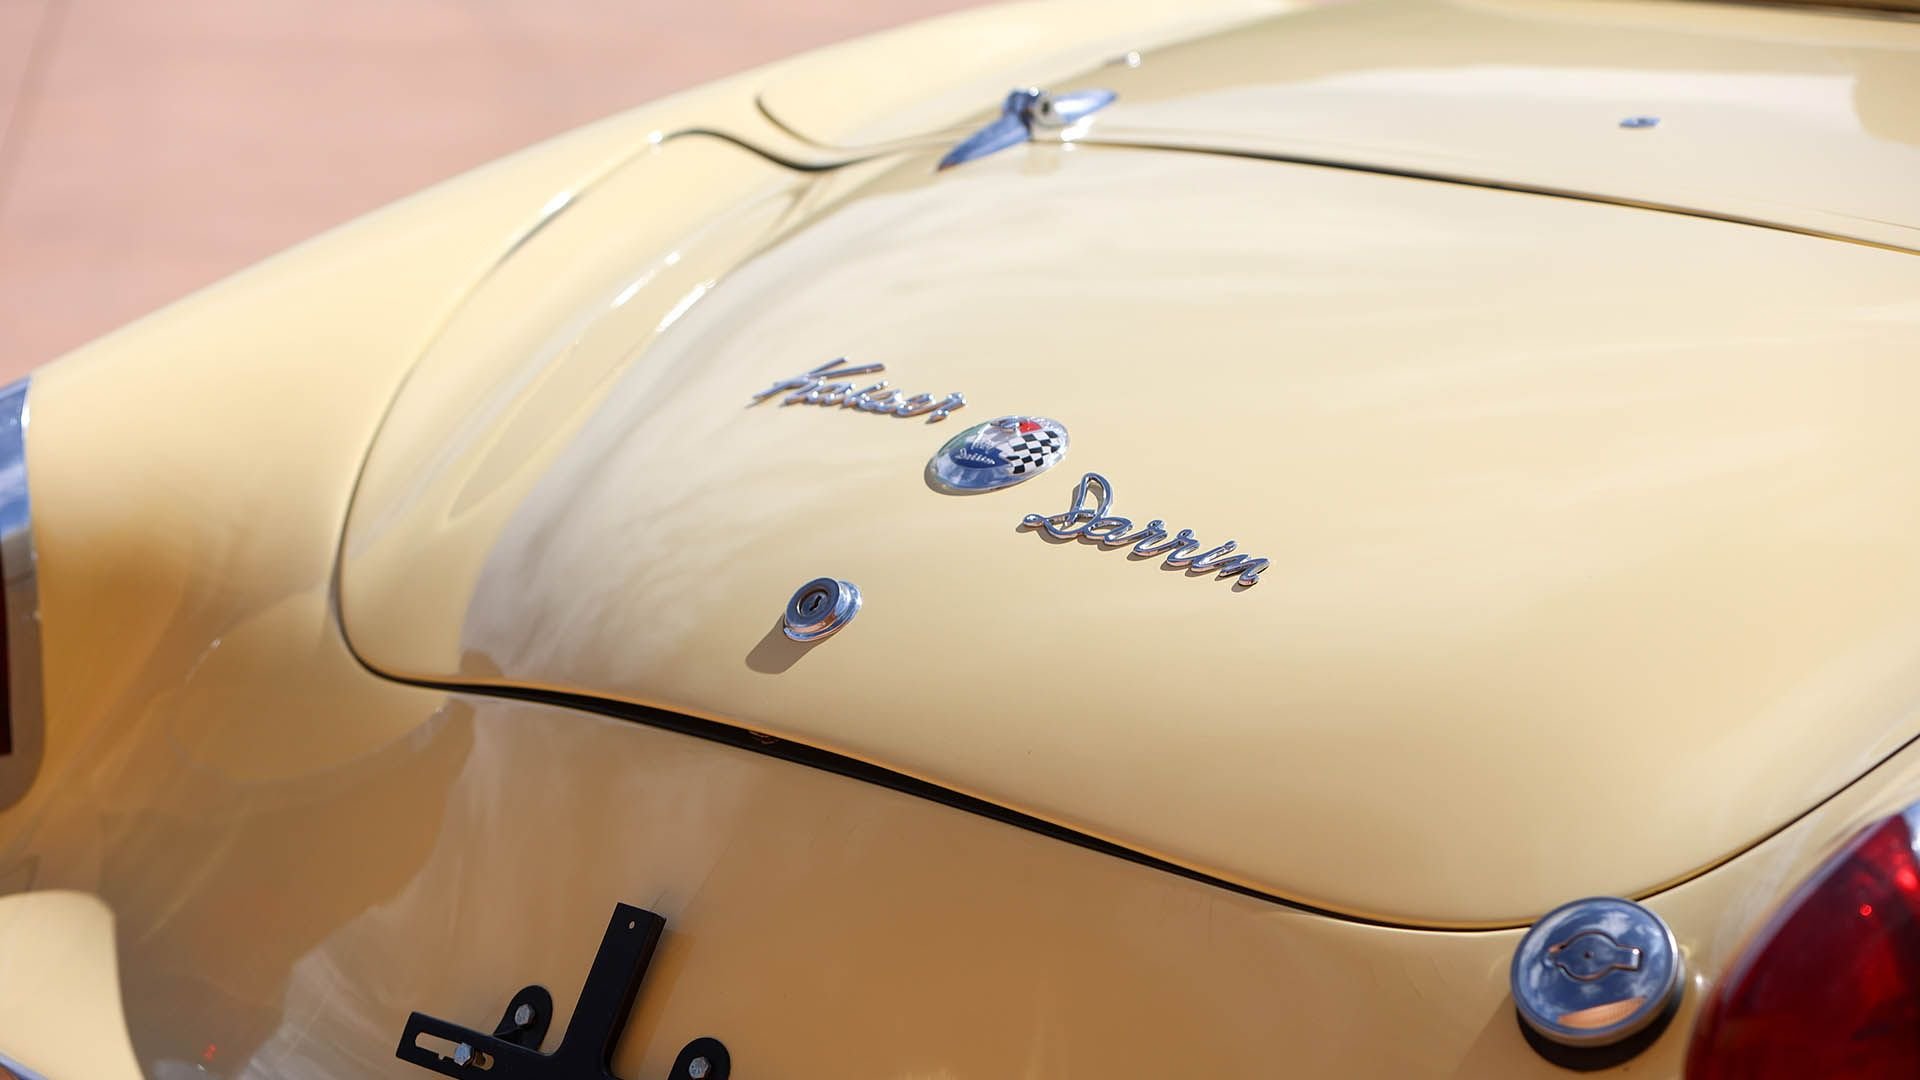 Broad Arrow Auctions | 1954 Kaiser-Darrin Roadster